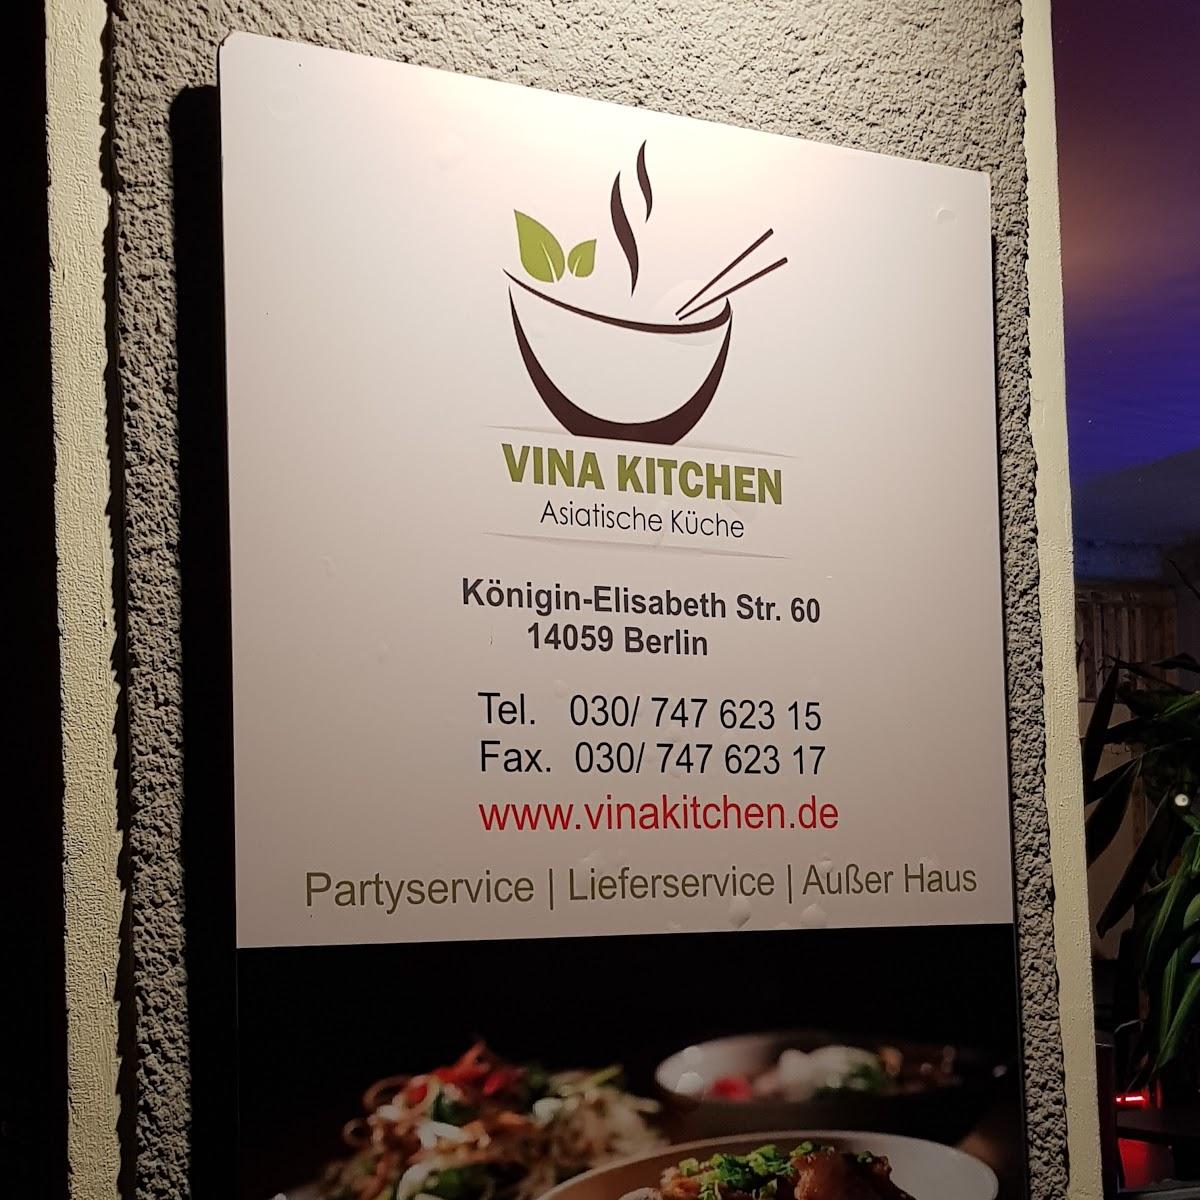 Restaurant "vinakitchen Thi To Loan Pham" in Berlin